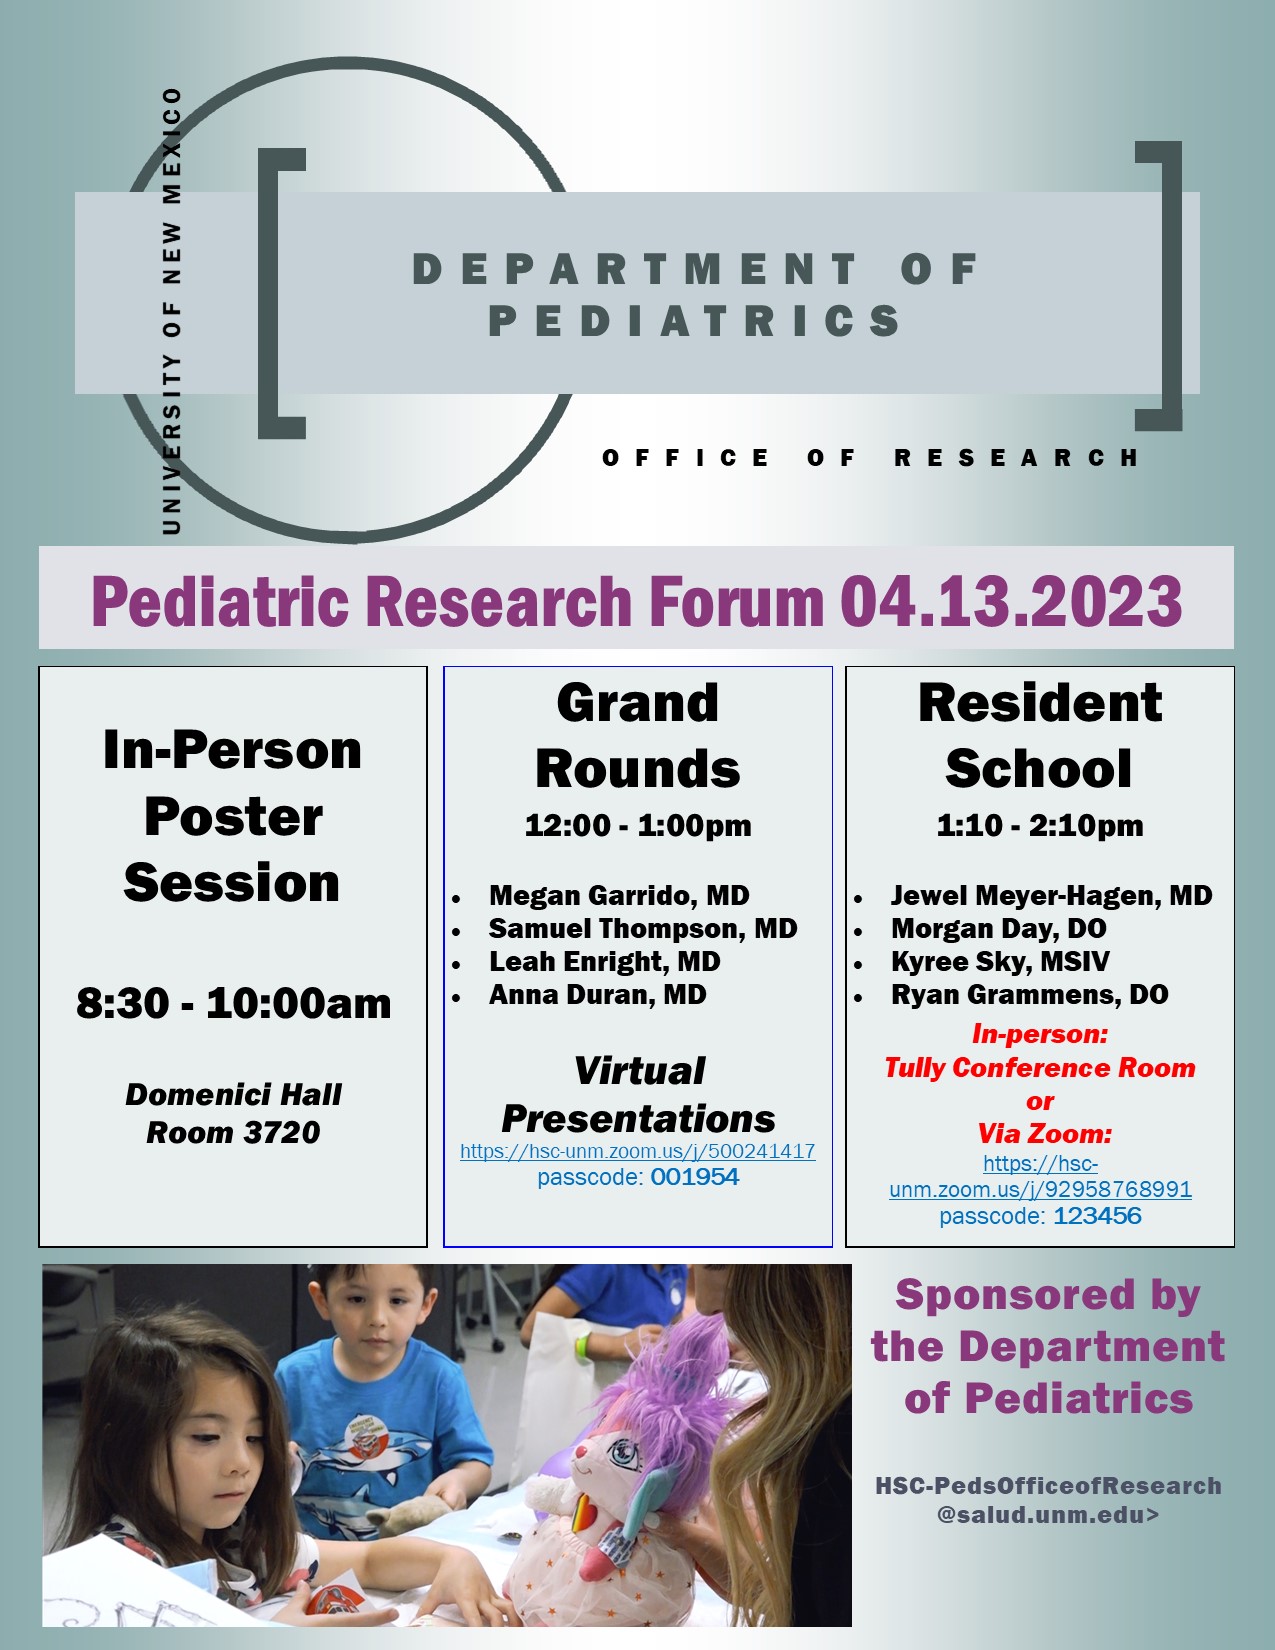 Annual Pediatric Research Forum Sessions